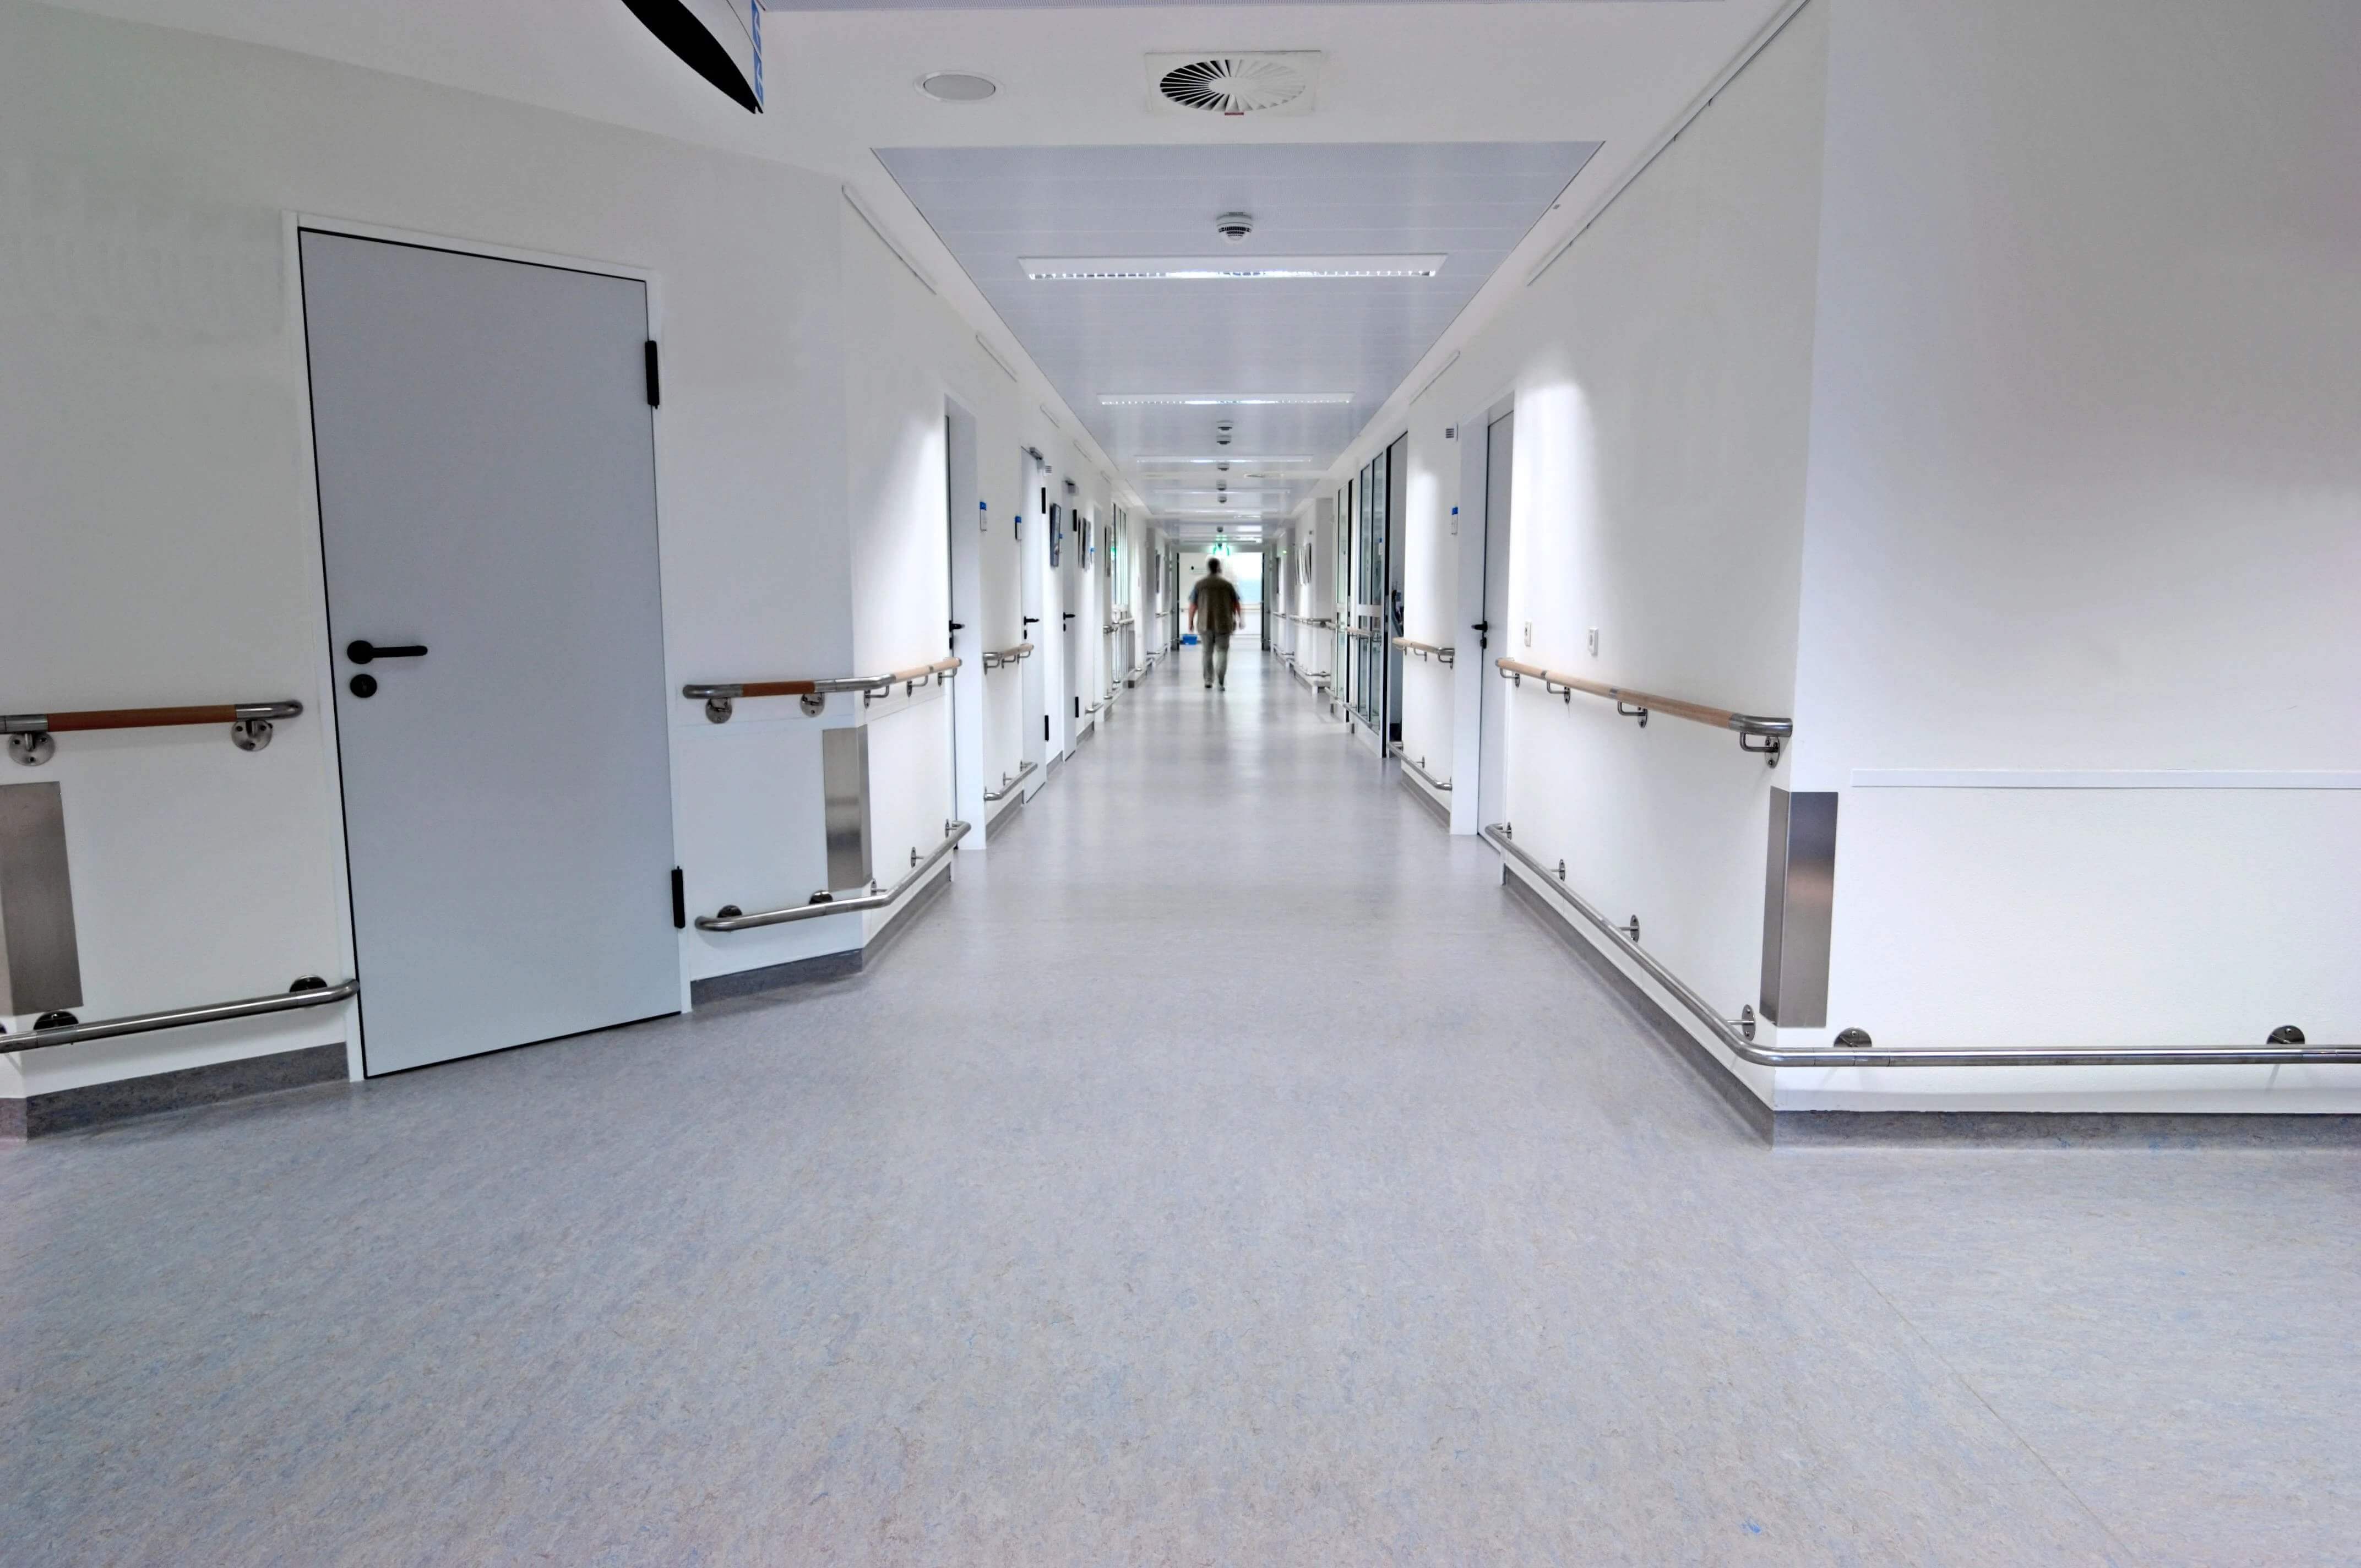 5 Benefits Of An Optimal Industrial Linoleum Flooring For Hospitals